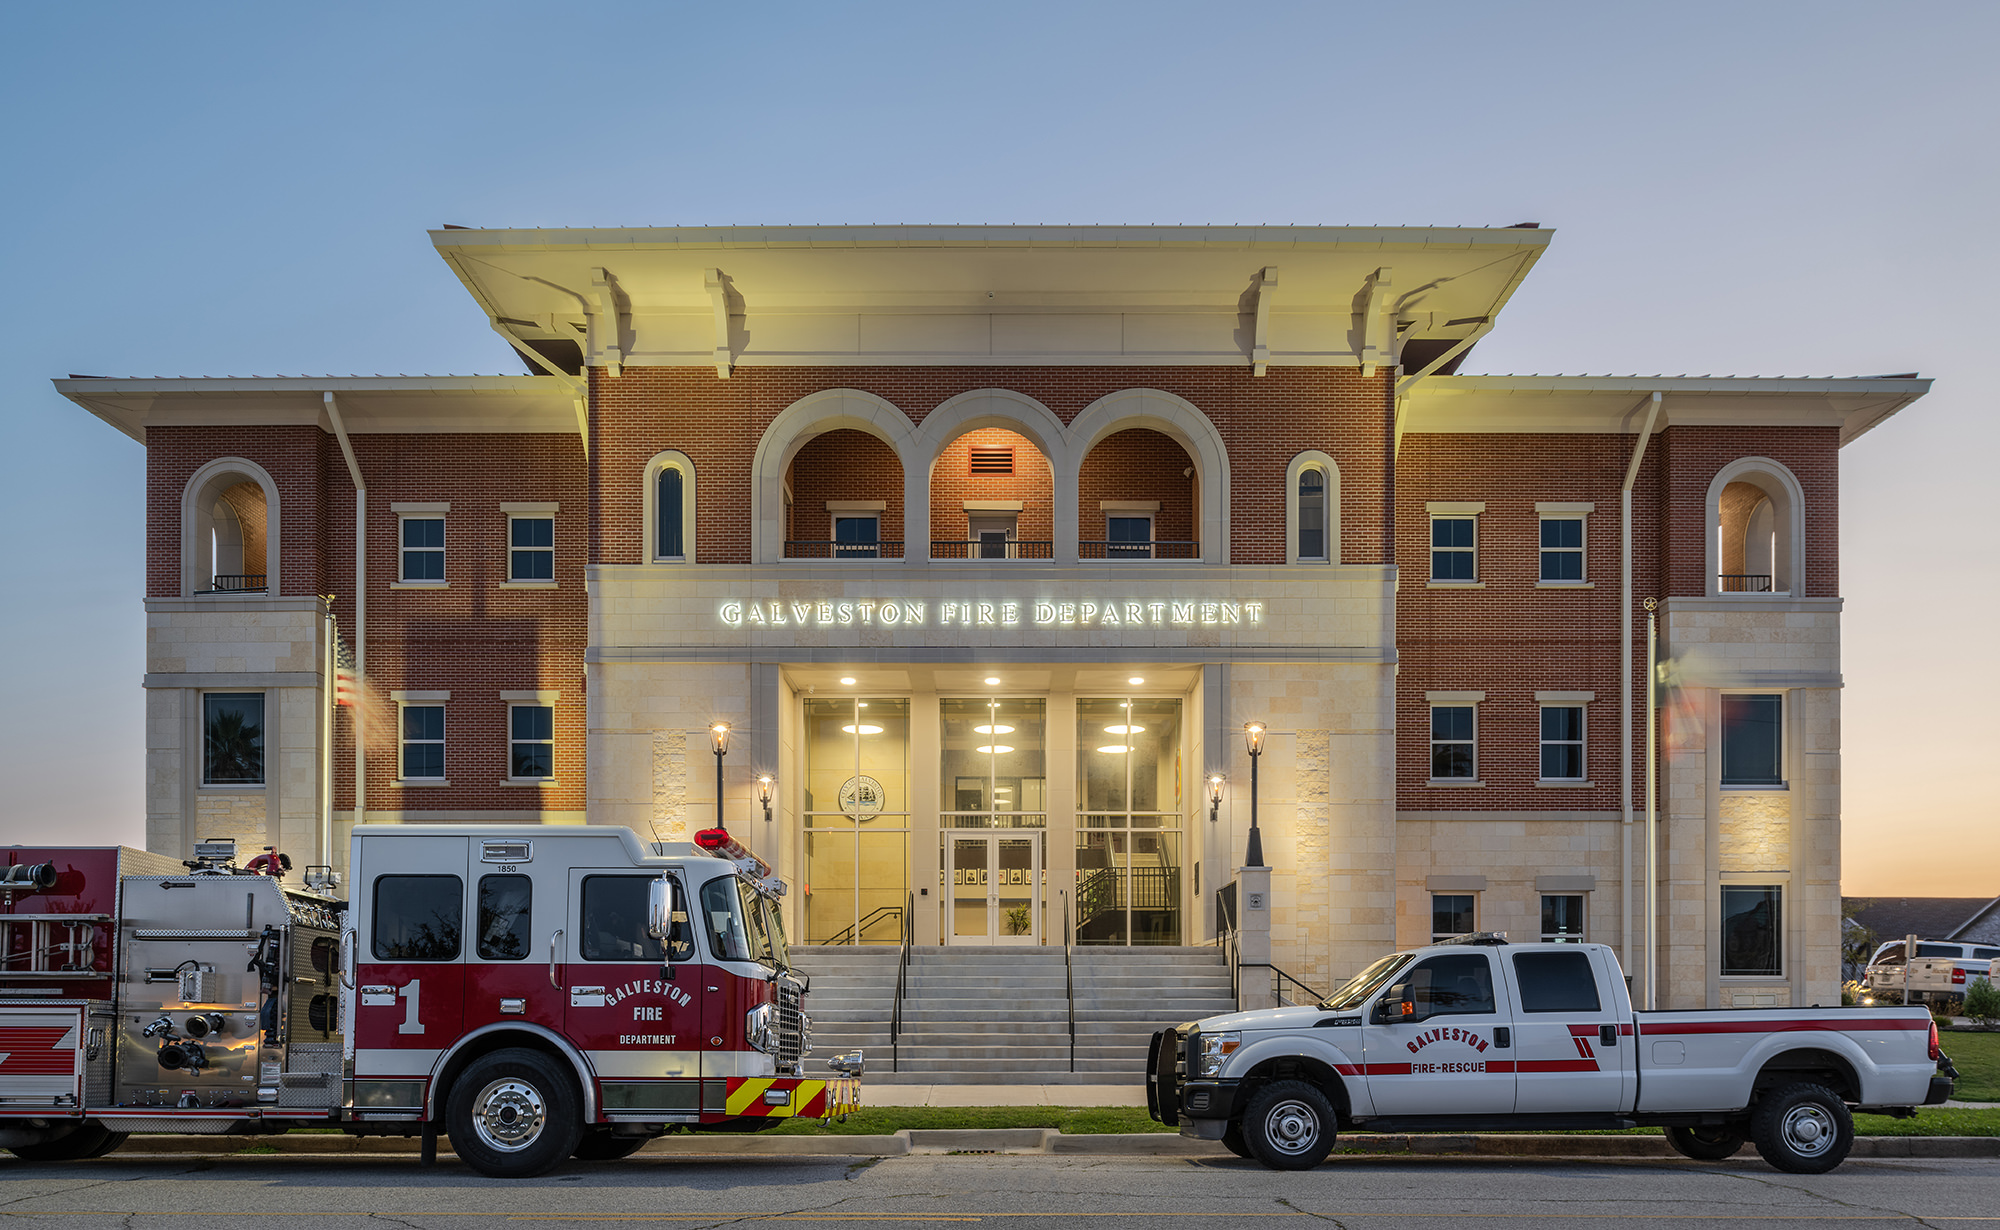 Galveston Fire Station No. 1